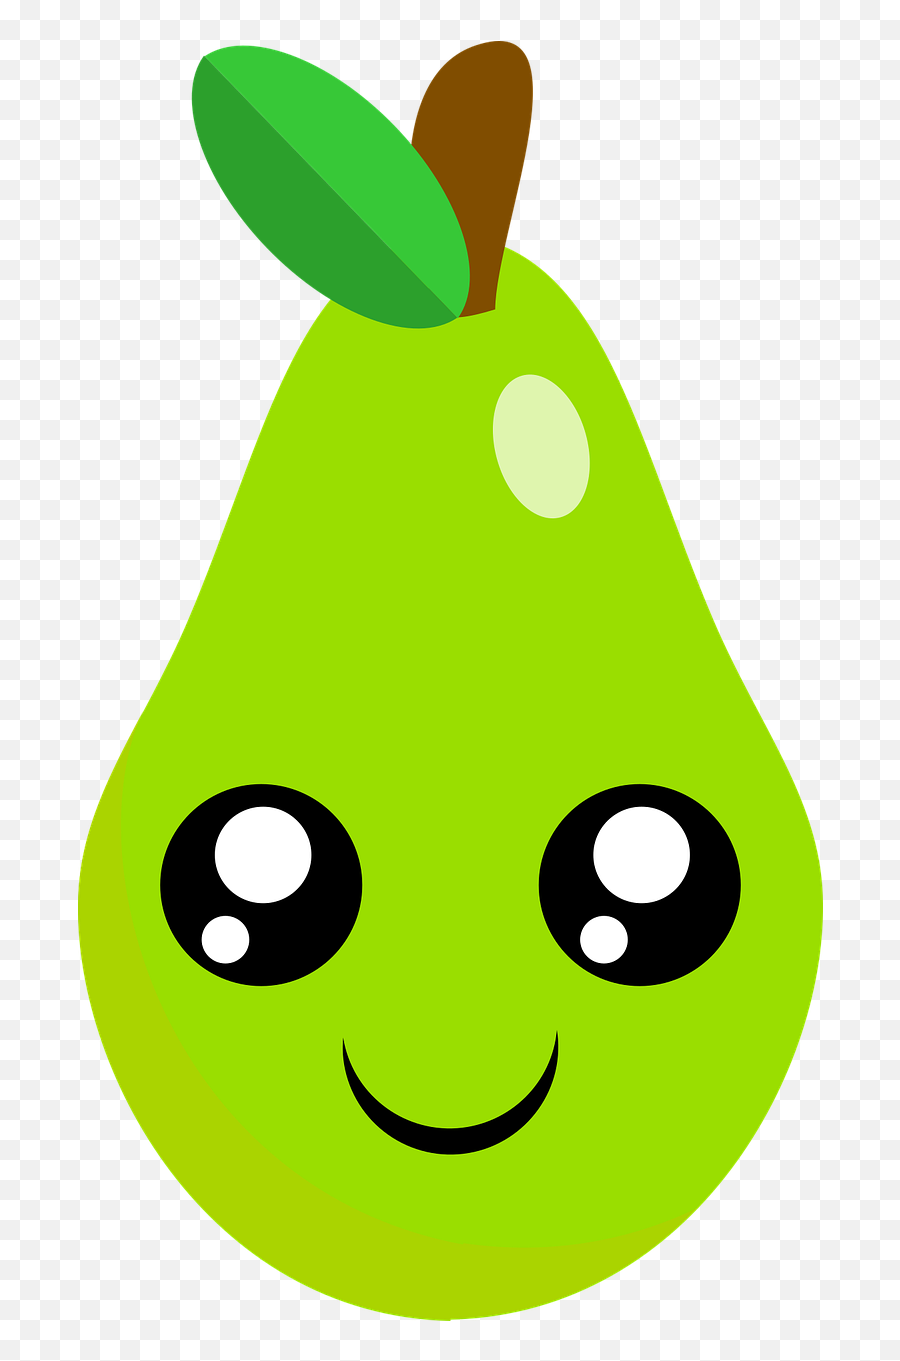 Pear Cute Kawaii - Free Vector Graphic On Pixabay Pera Kawaii Emoji,Kawaii Emoticons Wallpaper